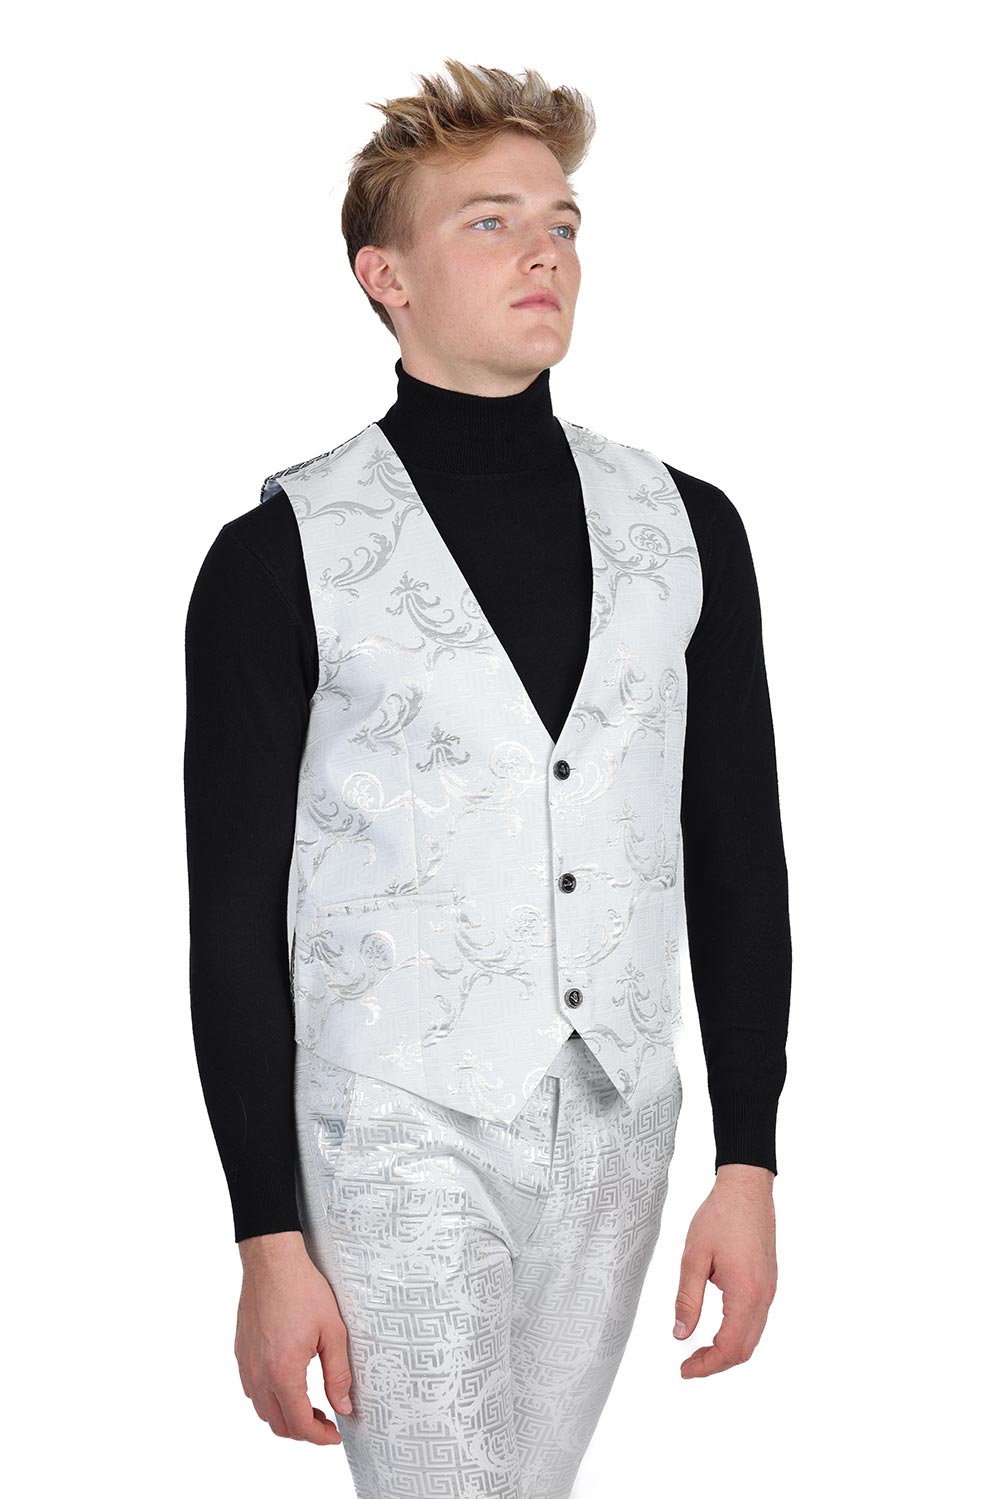 Barabas Men's Greek Key Pattern Floral Print Luxury Dress Vest 2VP3102 White Silver 